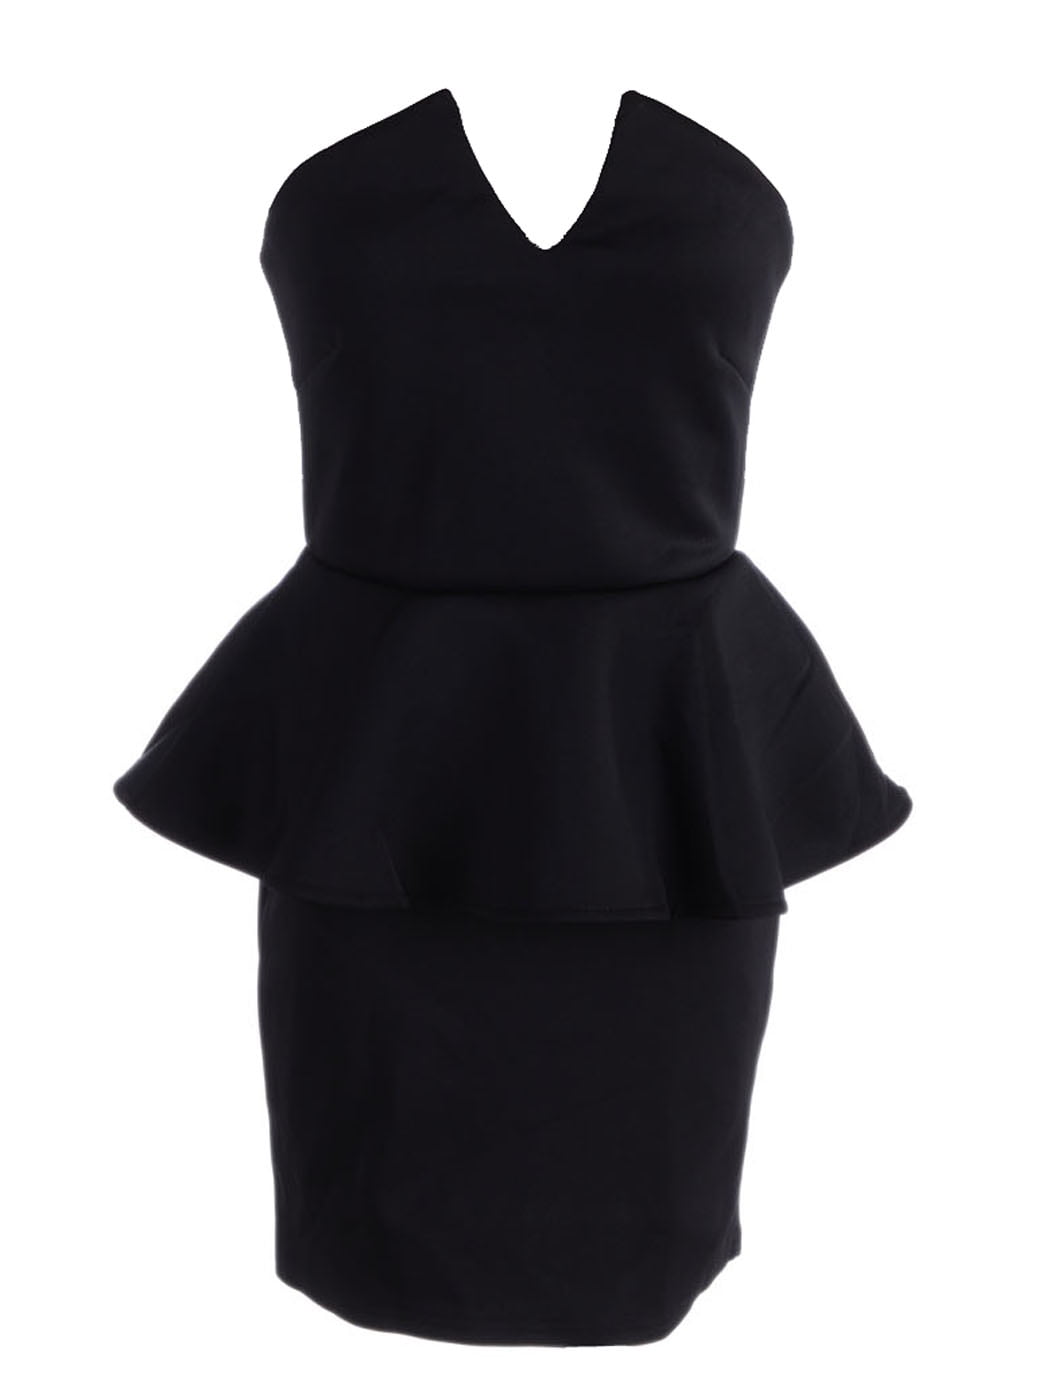 black dress with peplum waist